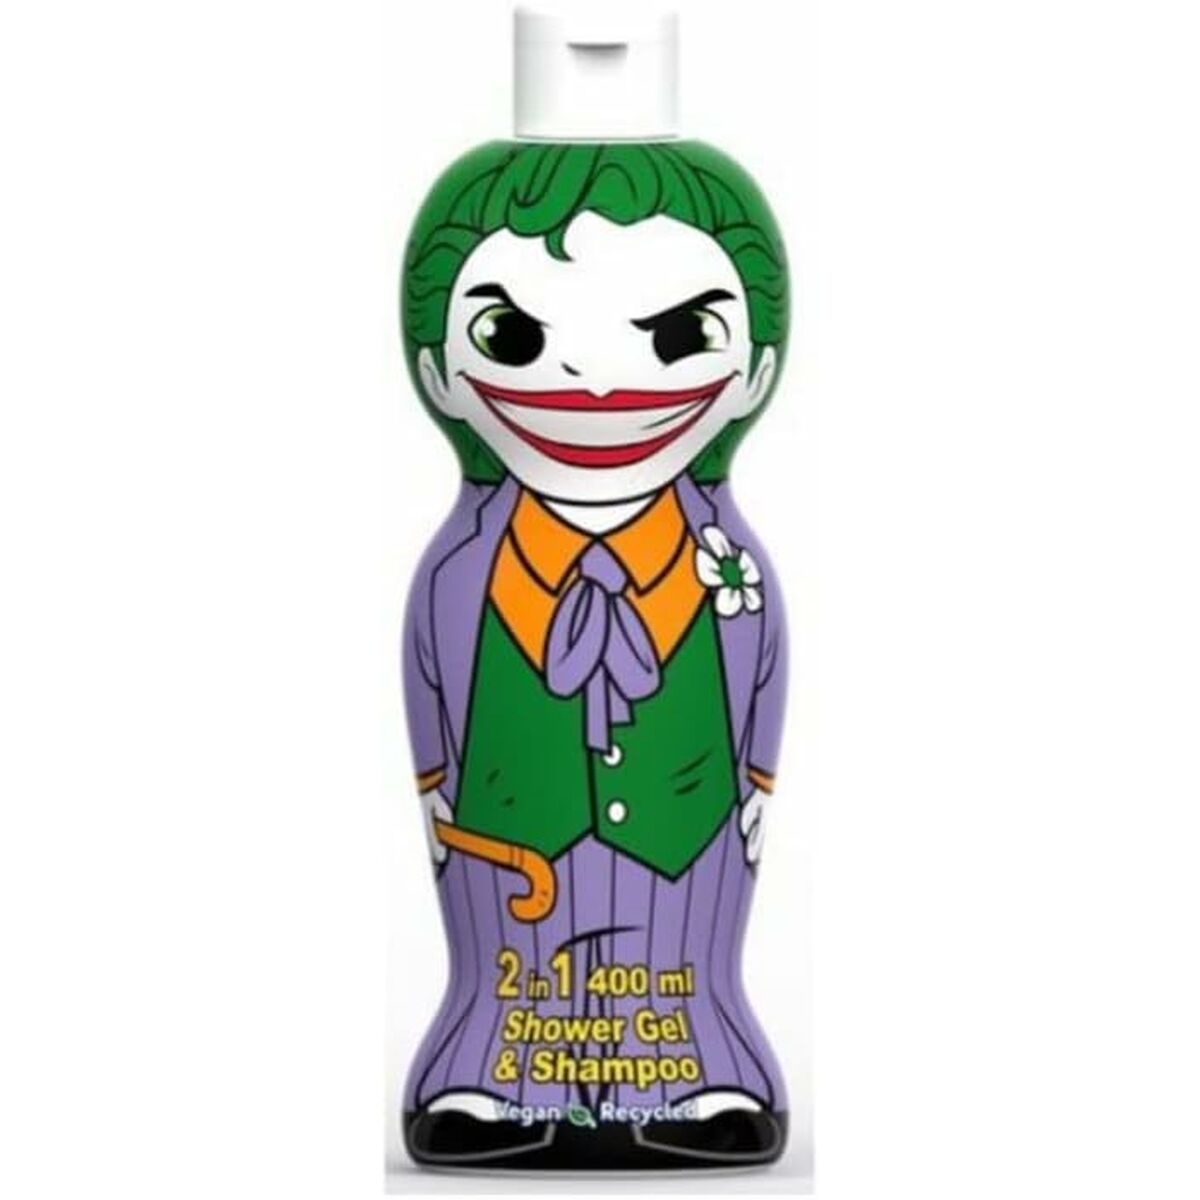 Gel & Shampoo 2 in 1 Air-Val 400 ml Joker